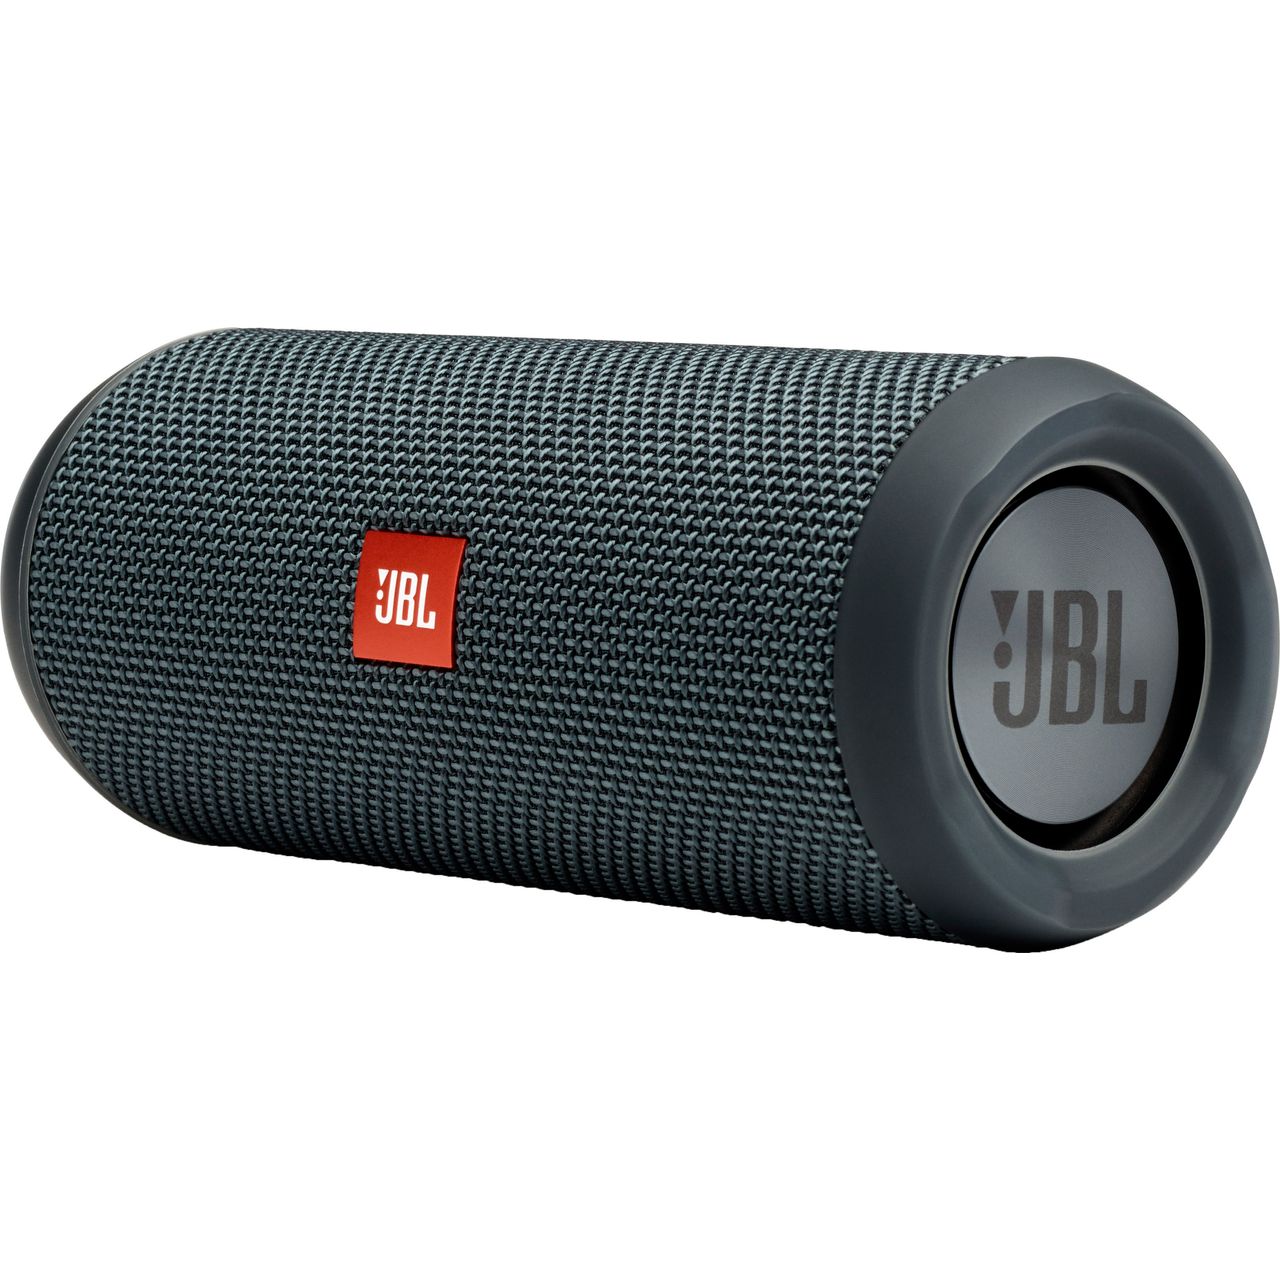 JBL Flip Essential Wireless Speaker Review